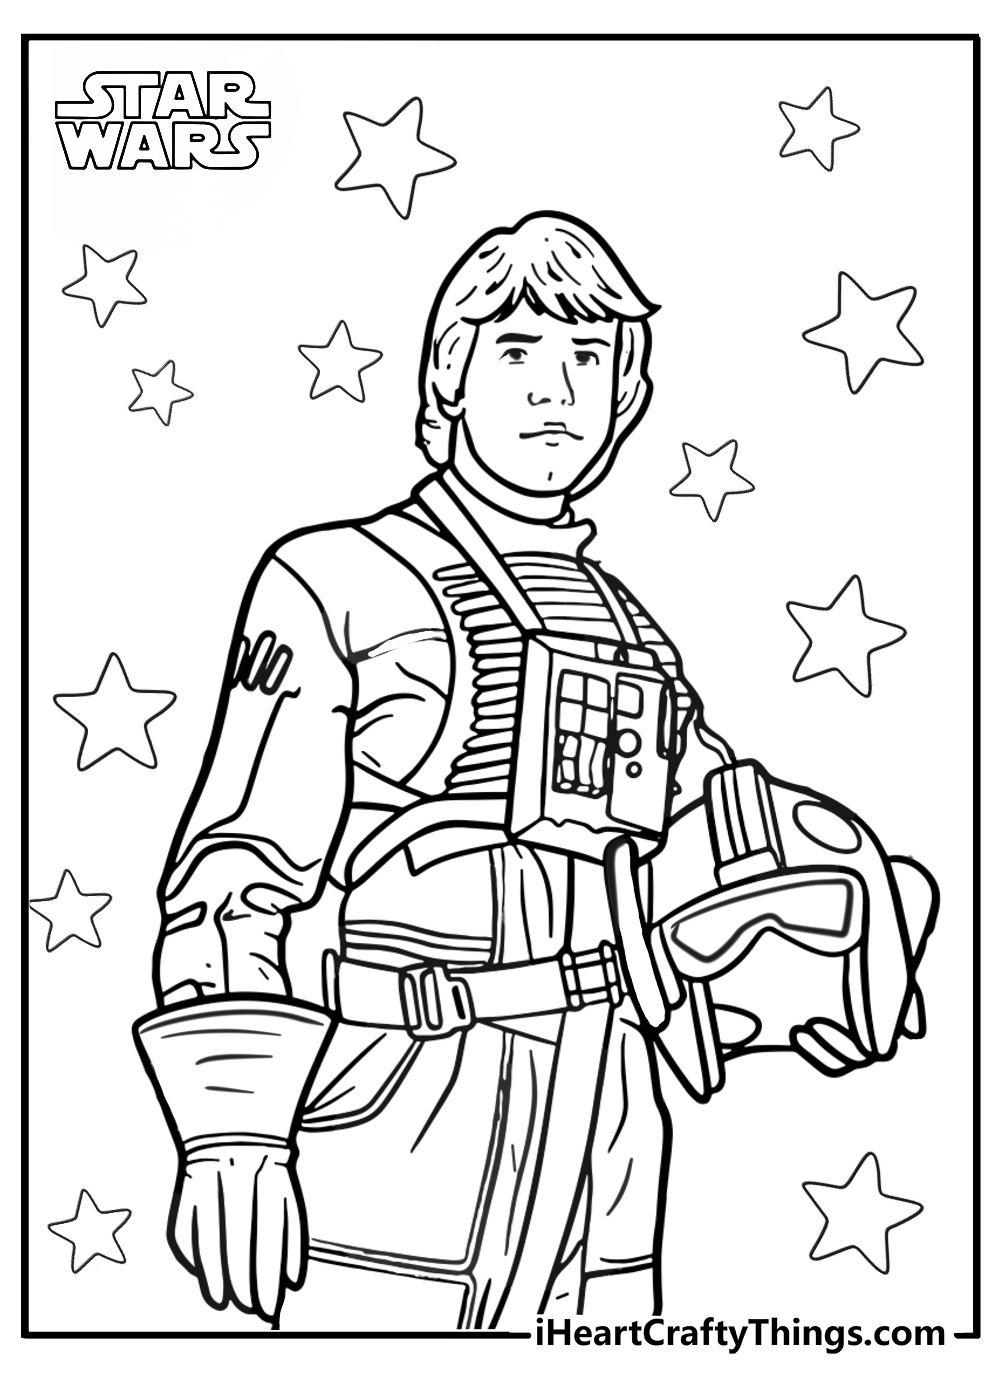 Luke Skywalker holding lightsaber coloring in